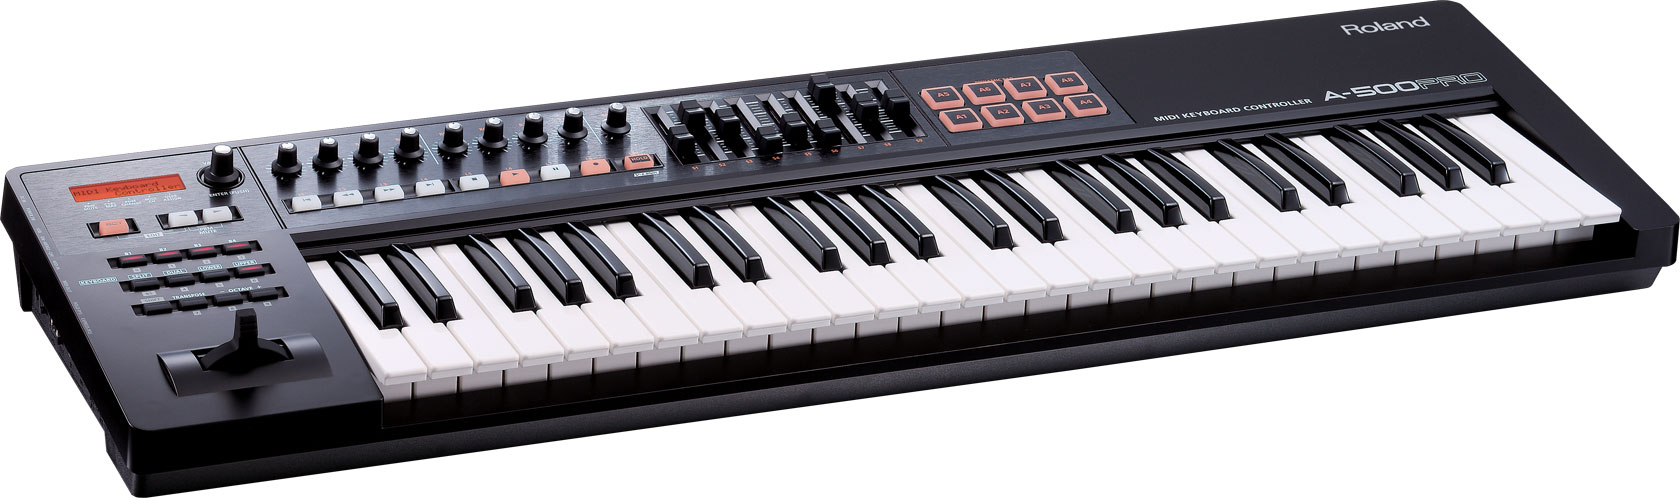 Roland A500 Pro-r - Controller-Keyboard - Variation 3